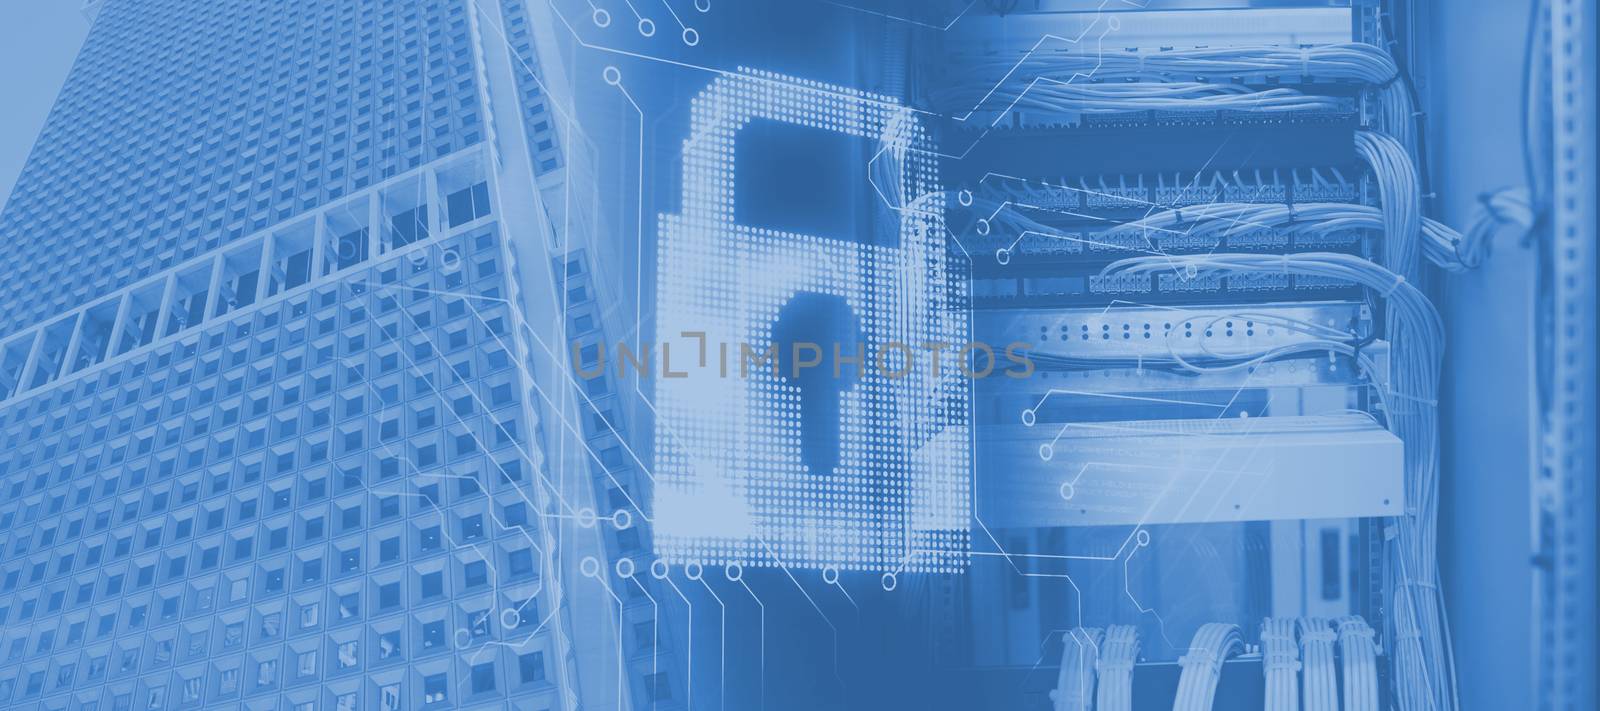 Composite image of blue padlock on white background by Wavebreakmedia